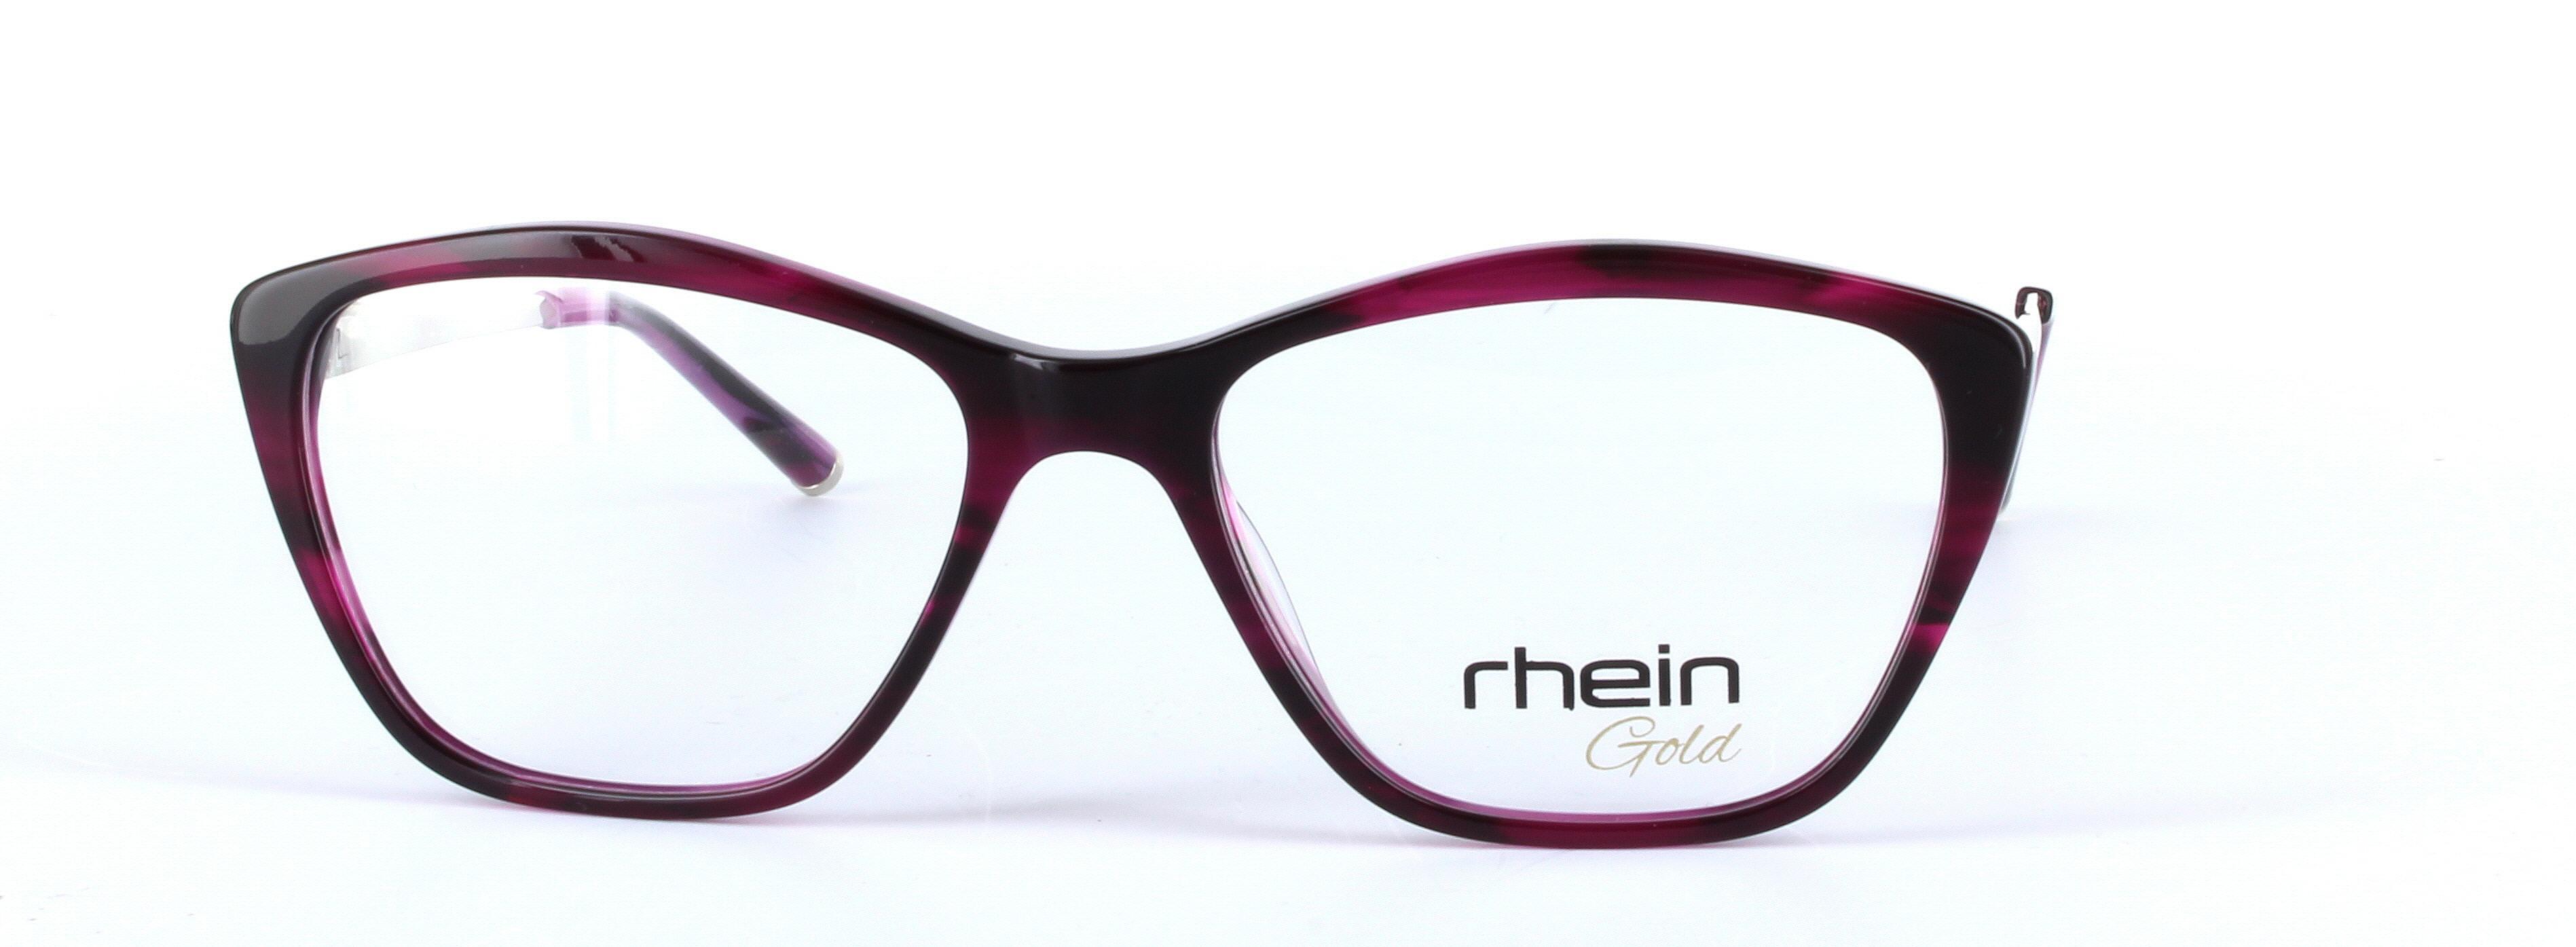 Miranda Purple Full Rim Oval Plastic Glasses - Image View 5